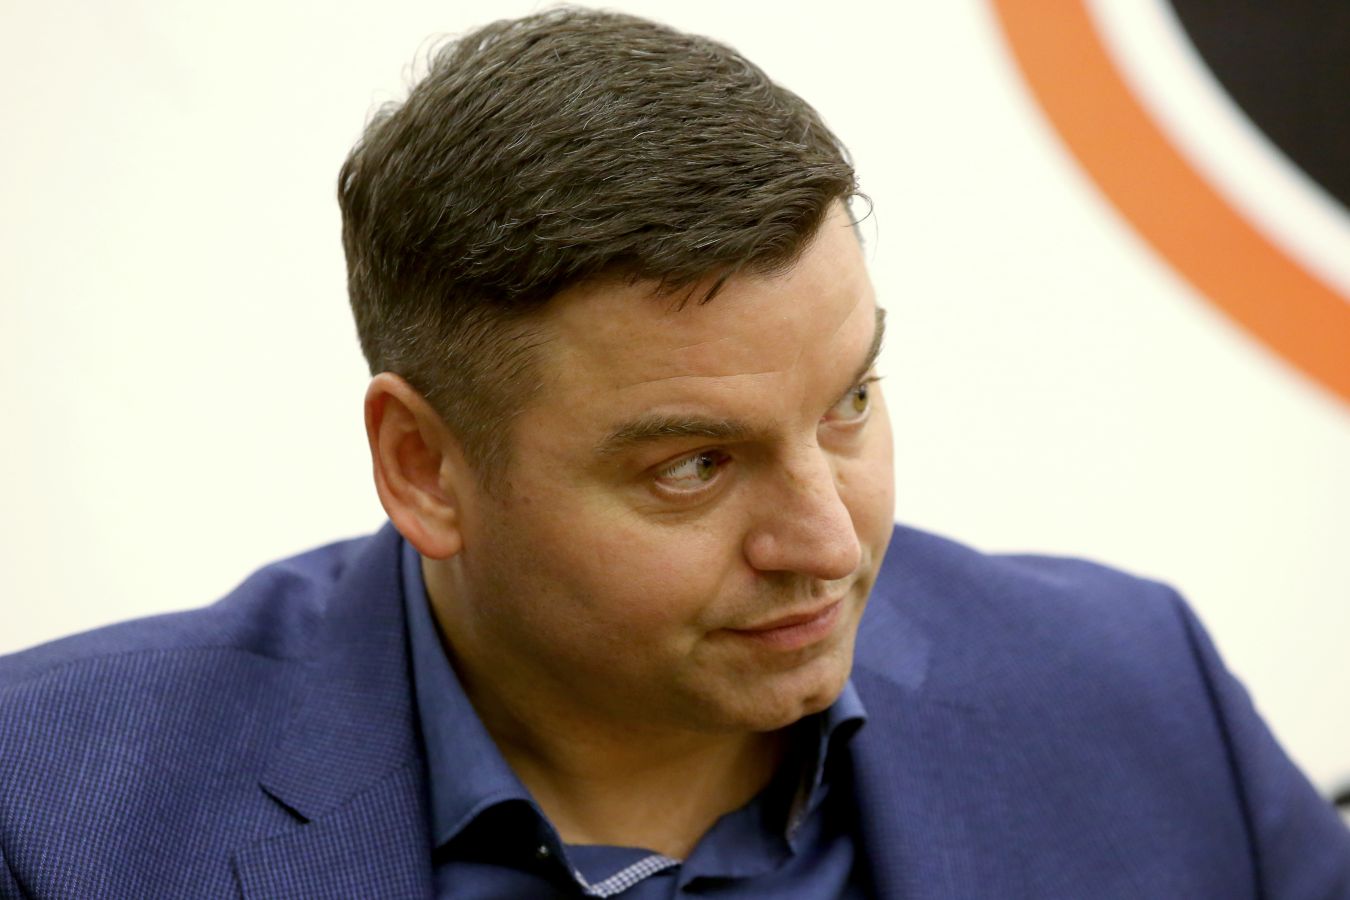 Орещук назвал свою главную ошибку на посту спортивного директора «Динамо»